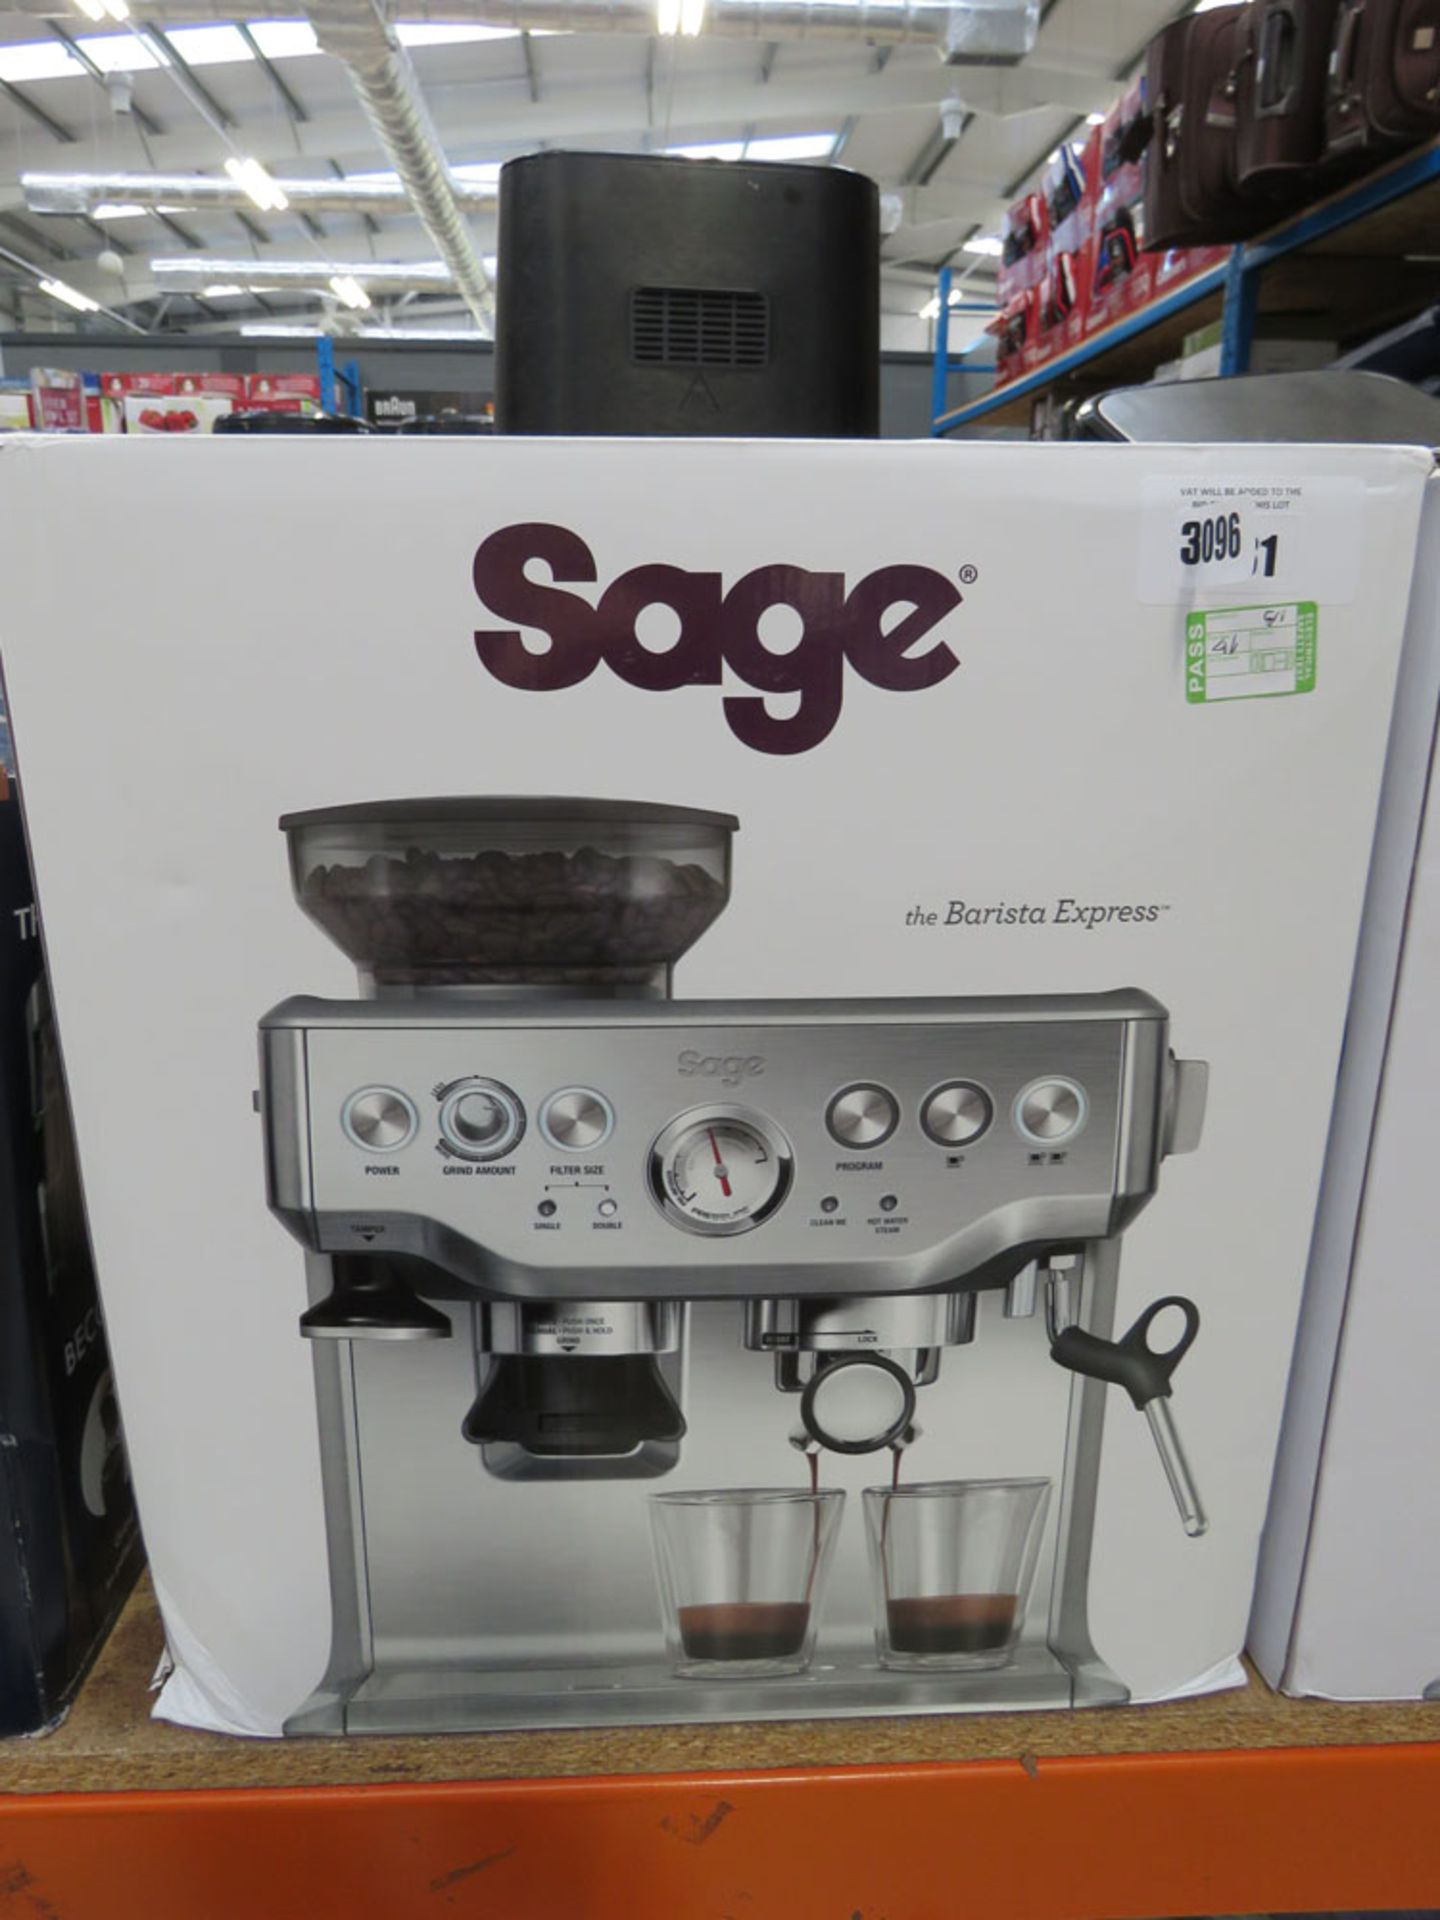 3081 - Sage Barista Express coffee machine with box